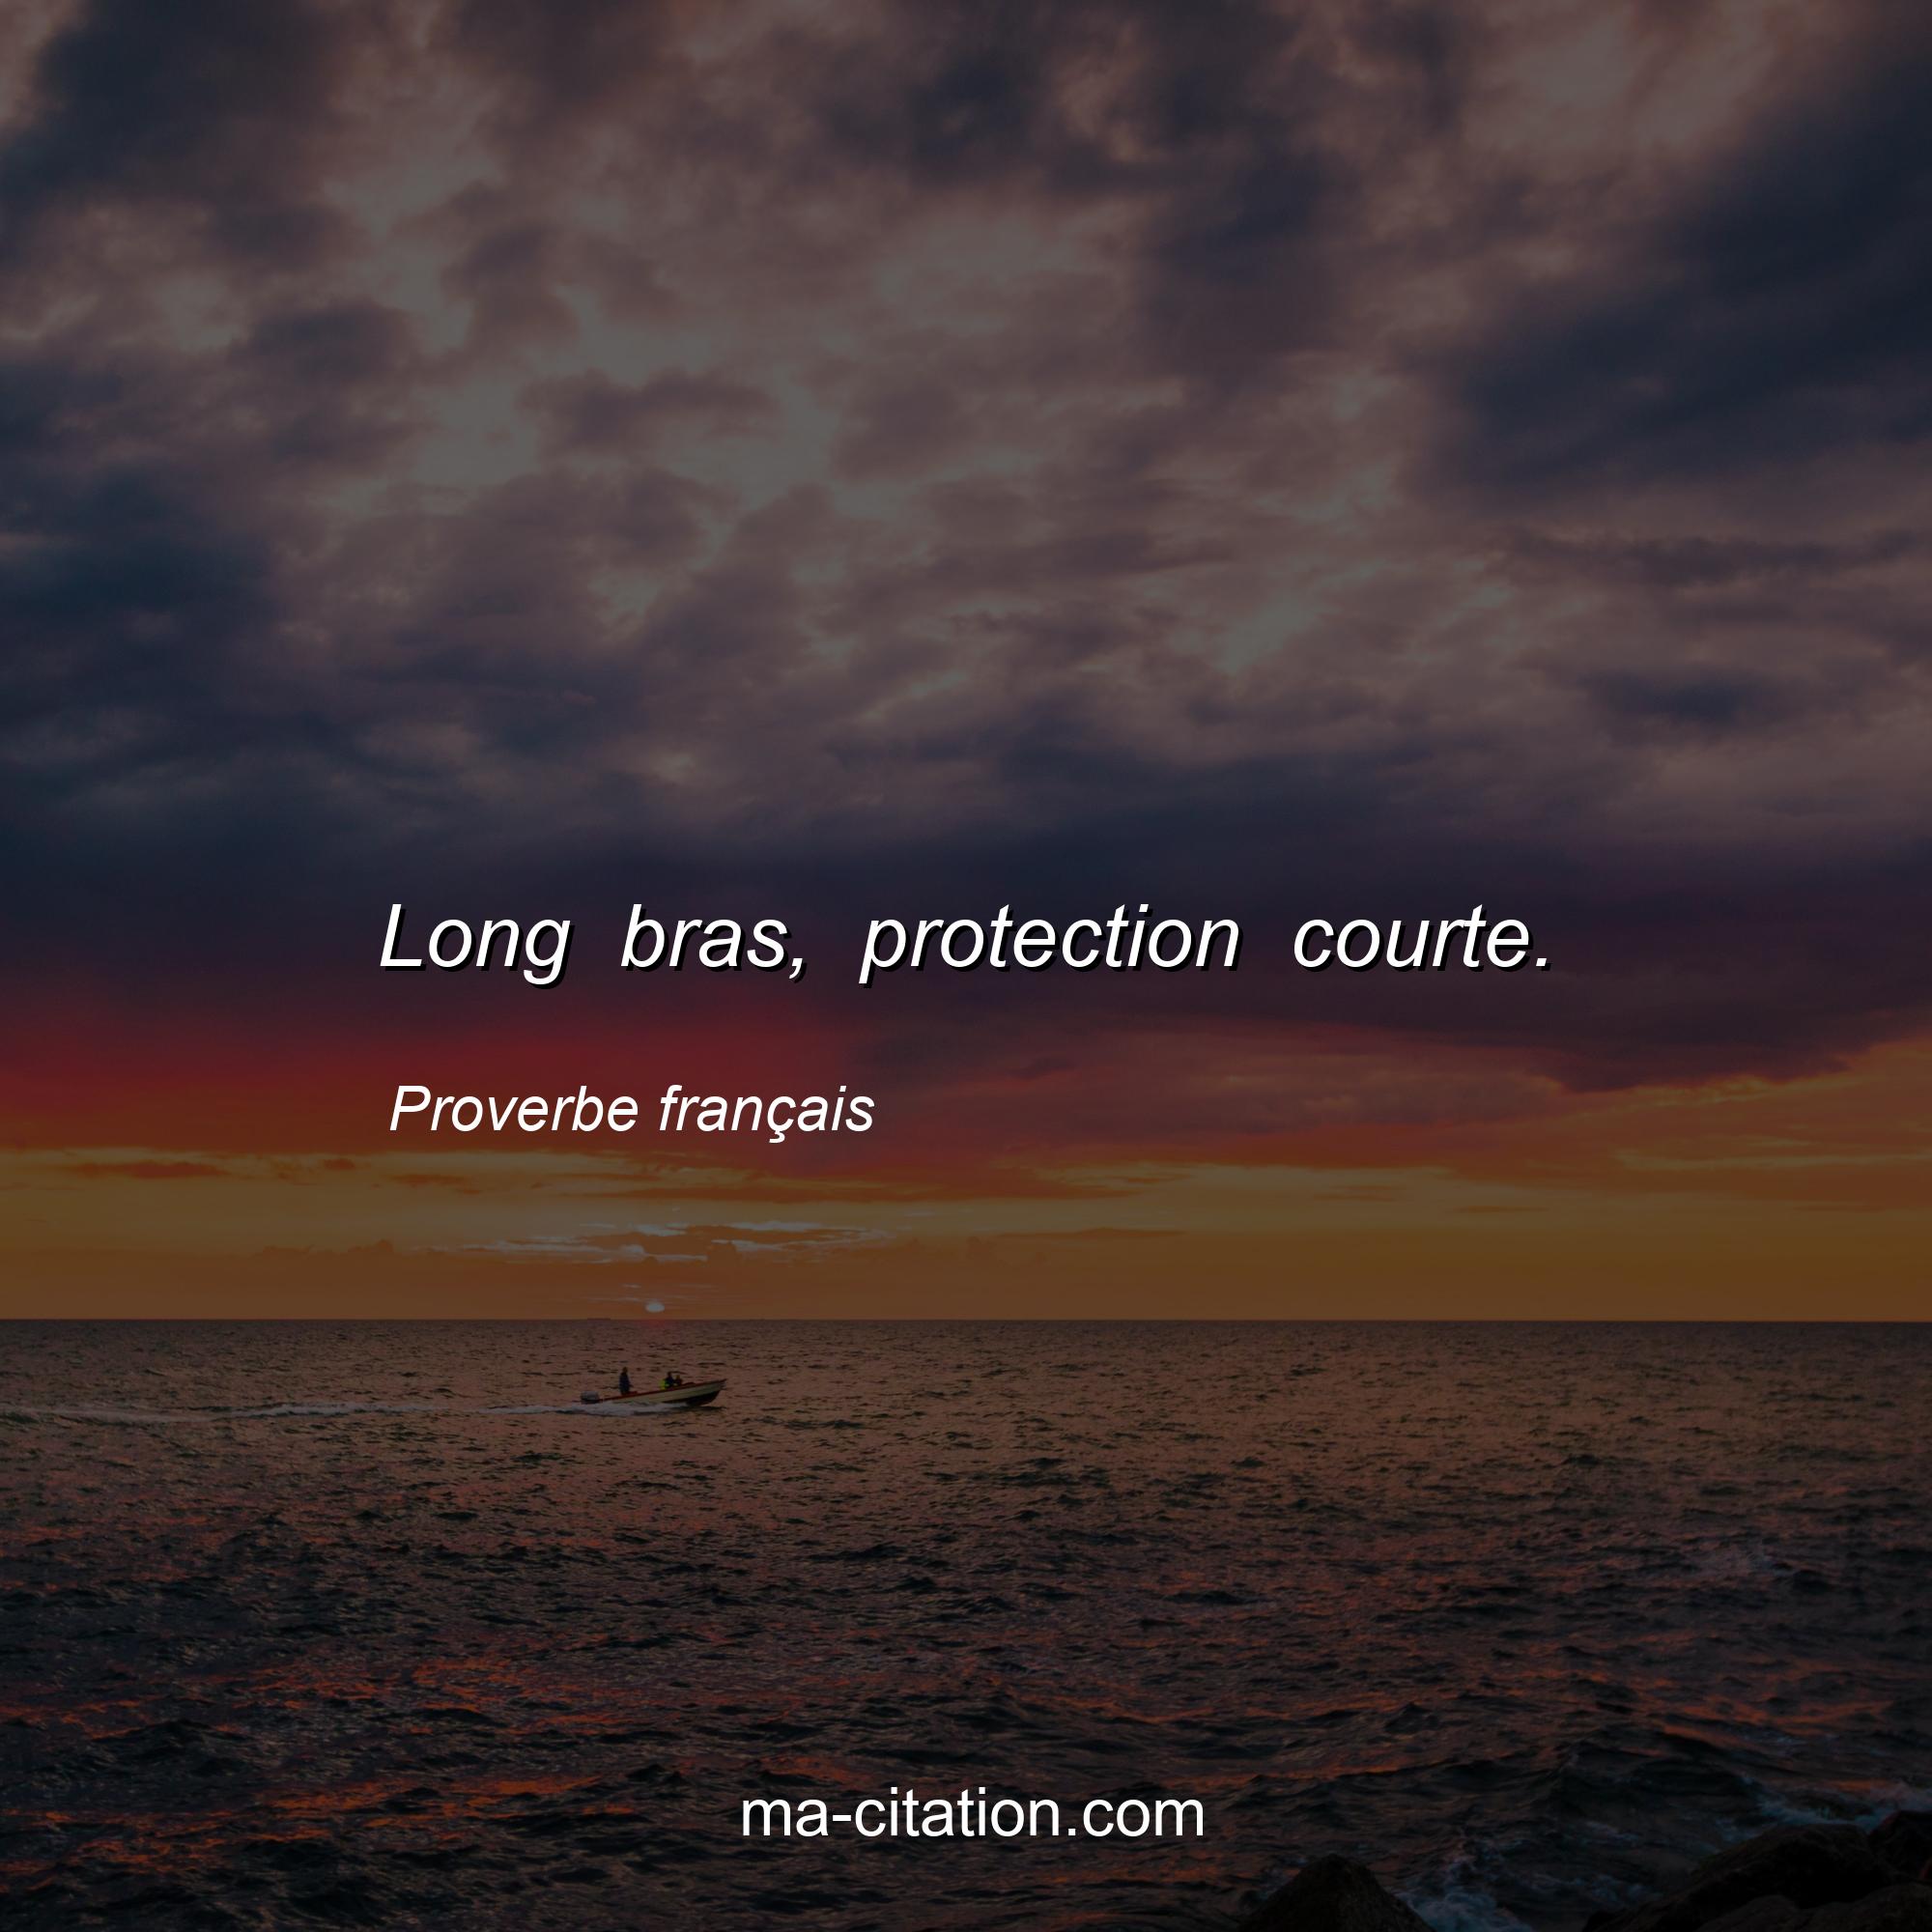 Proverbe français : Long bras, protection courte.